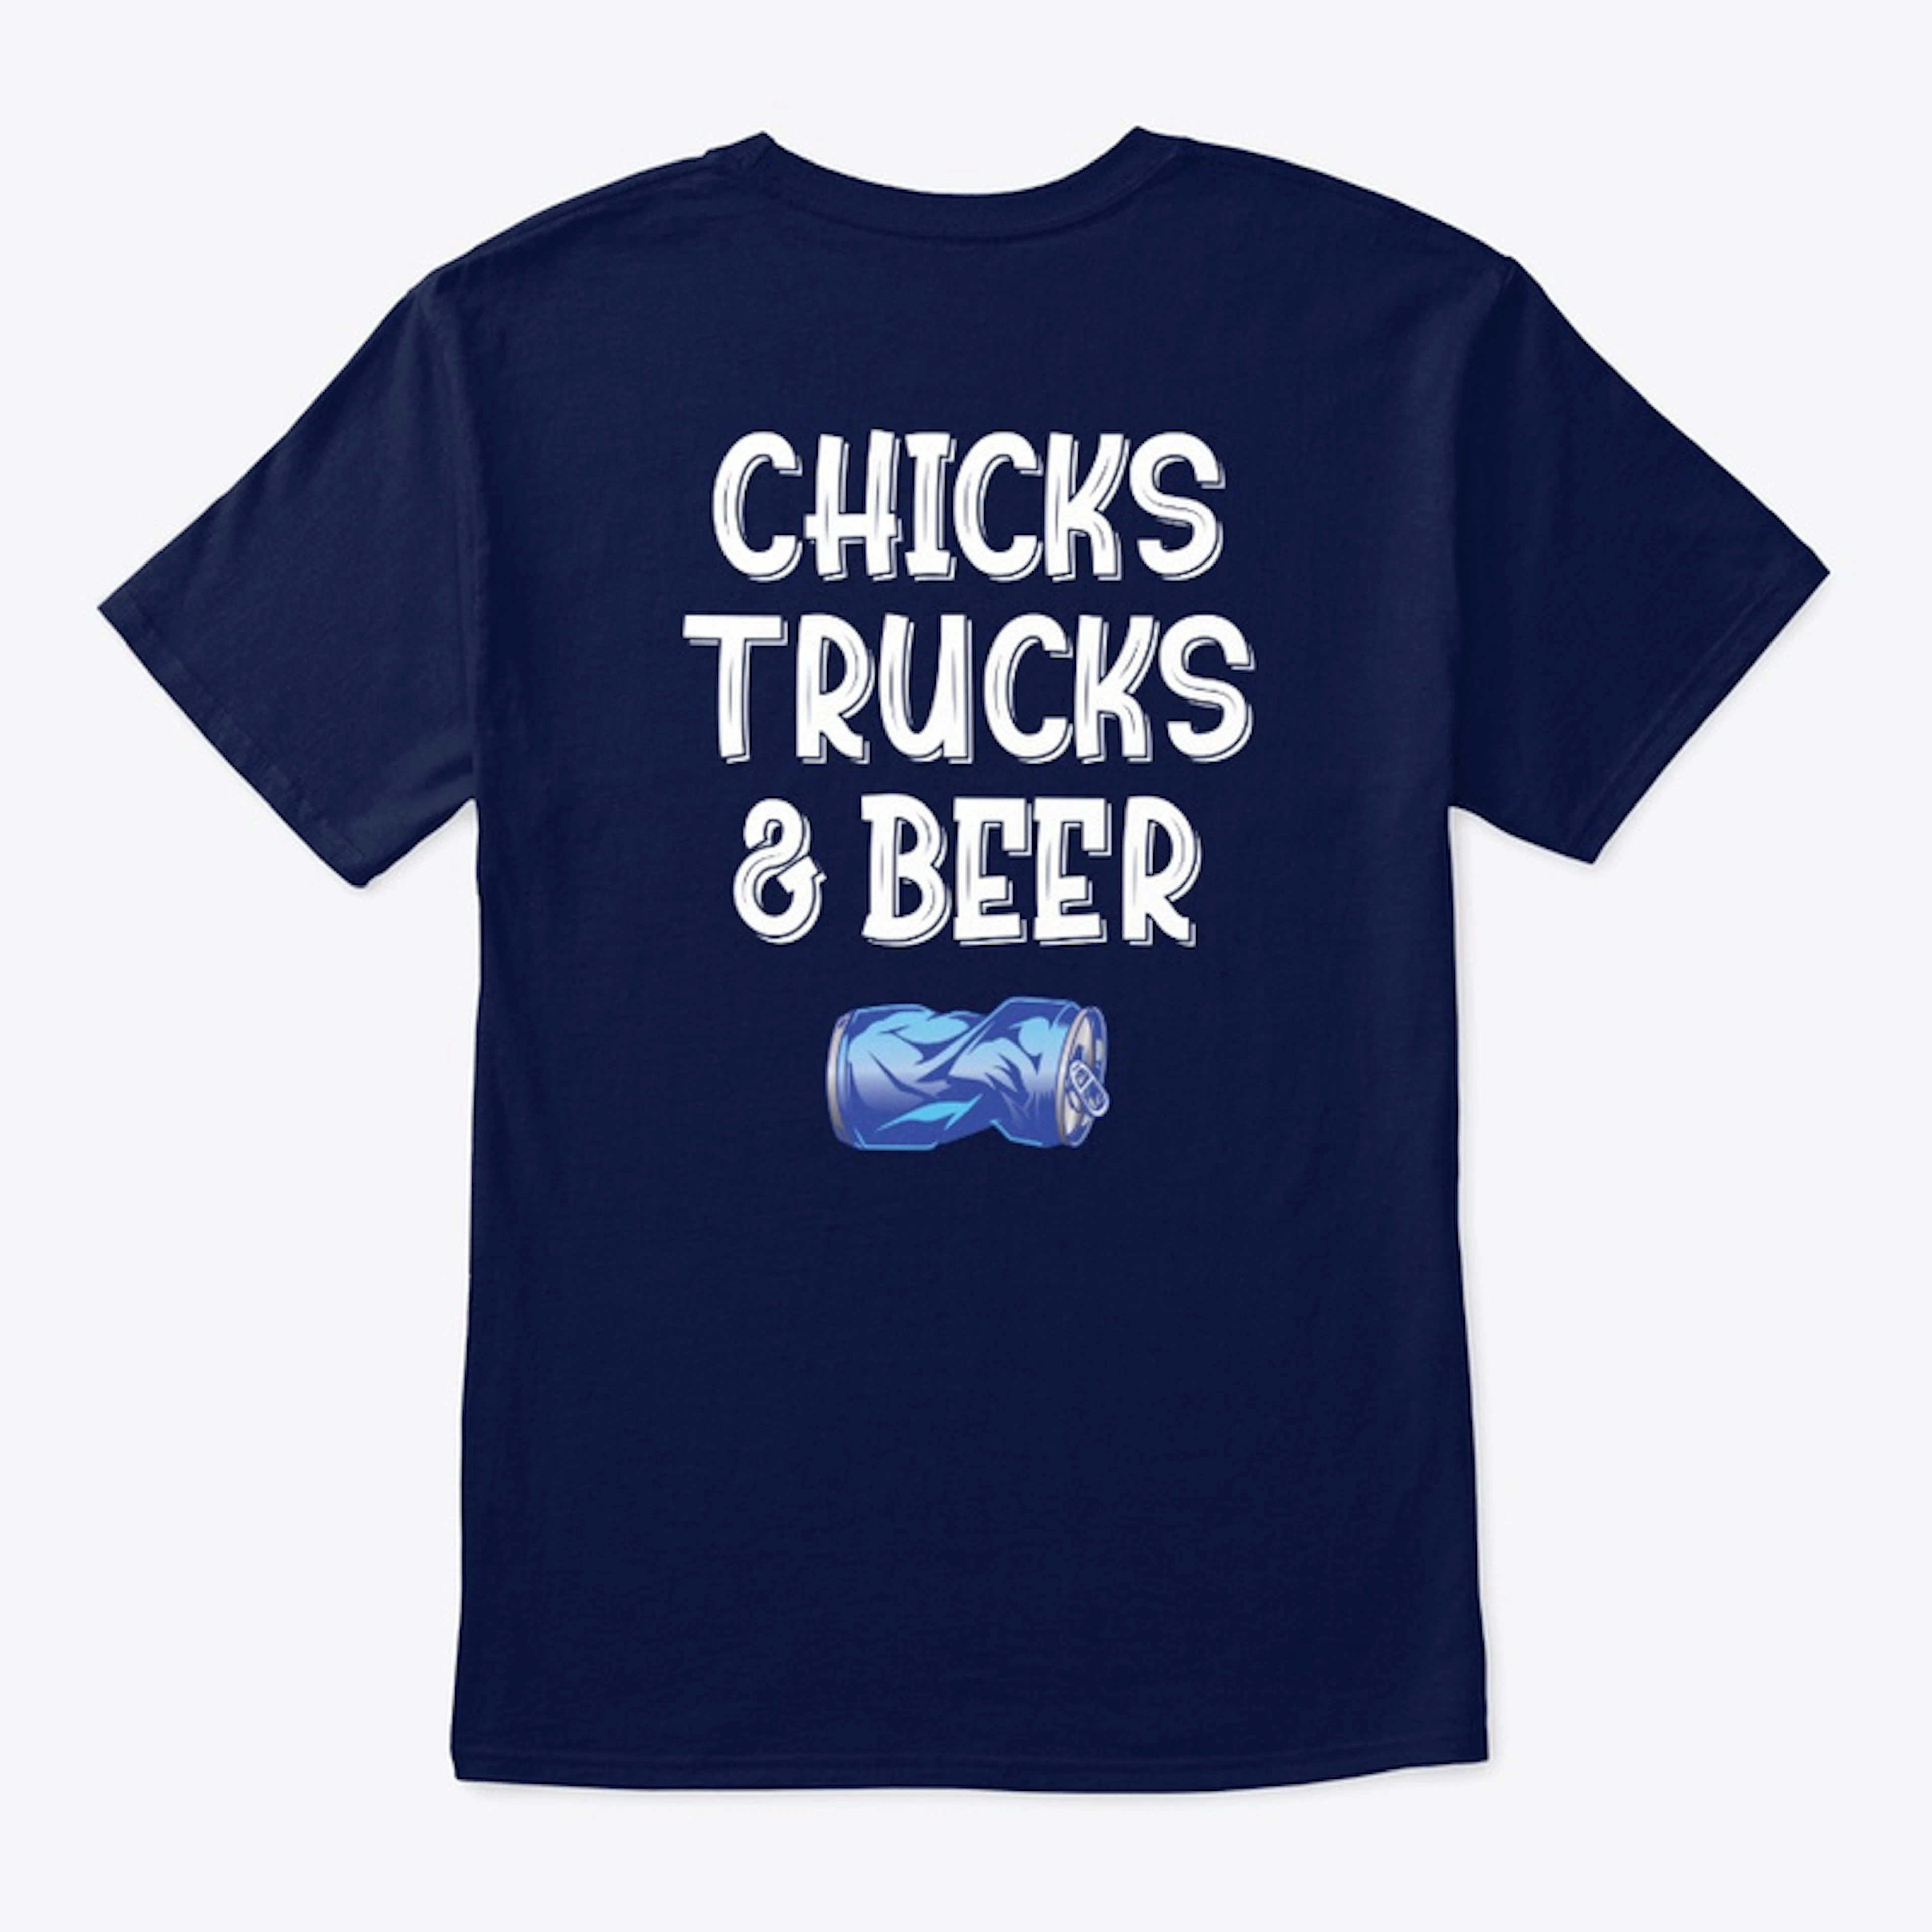 Chicks Trucks & Beer Tee